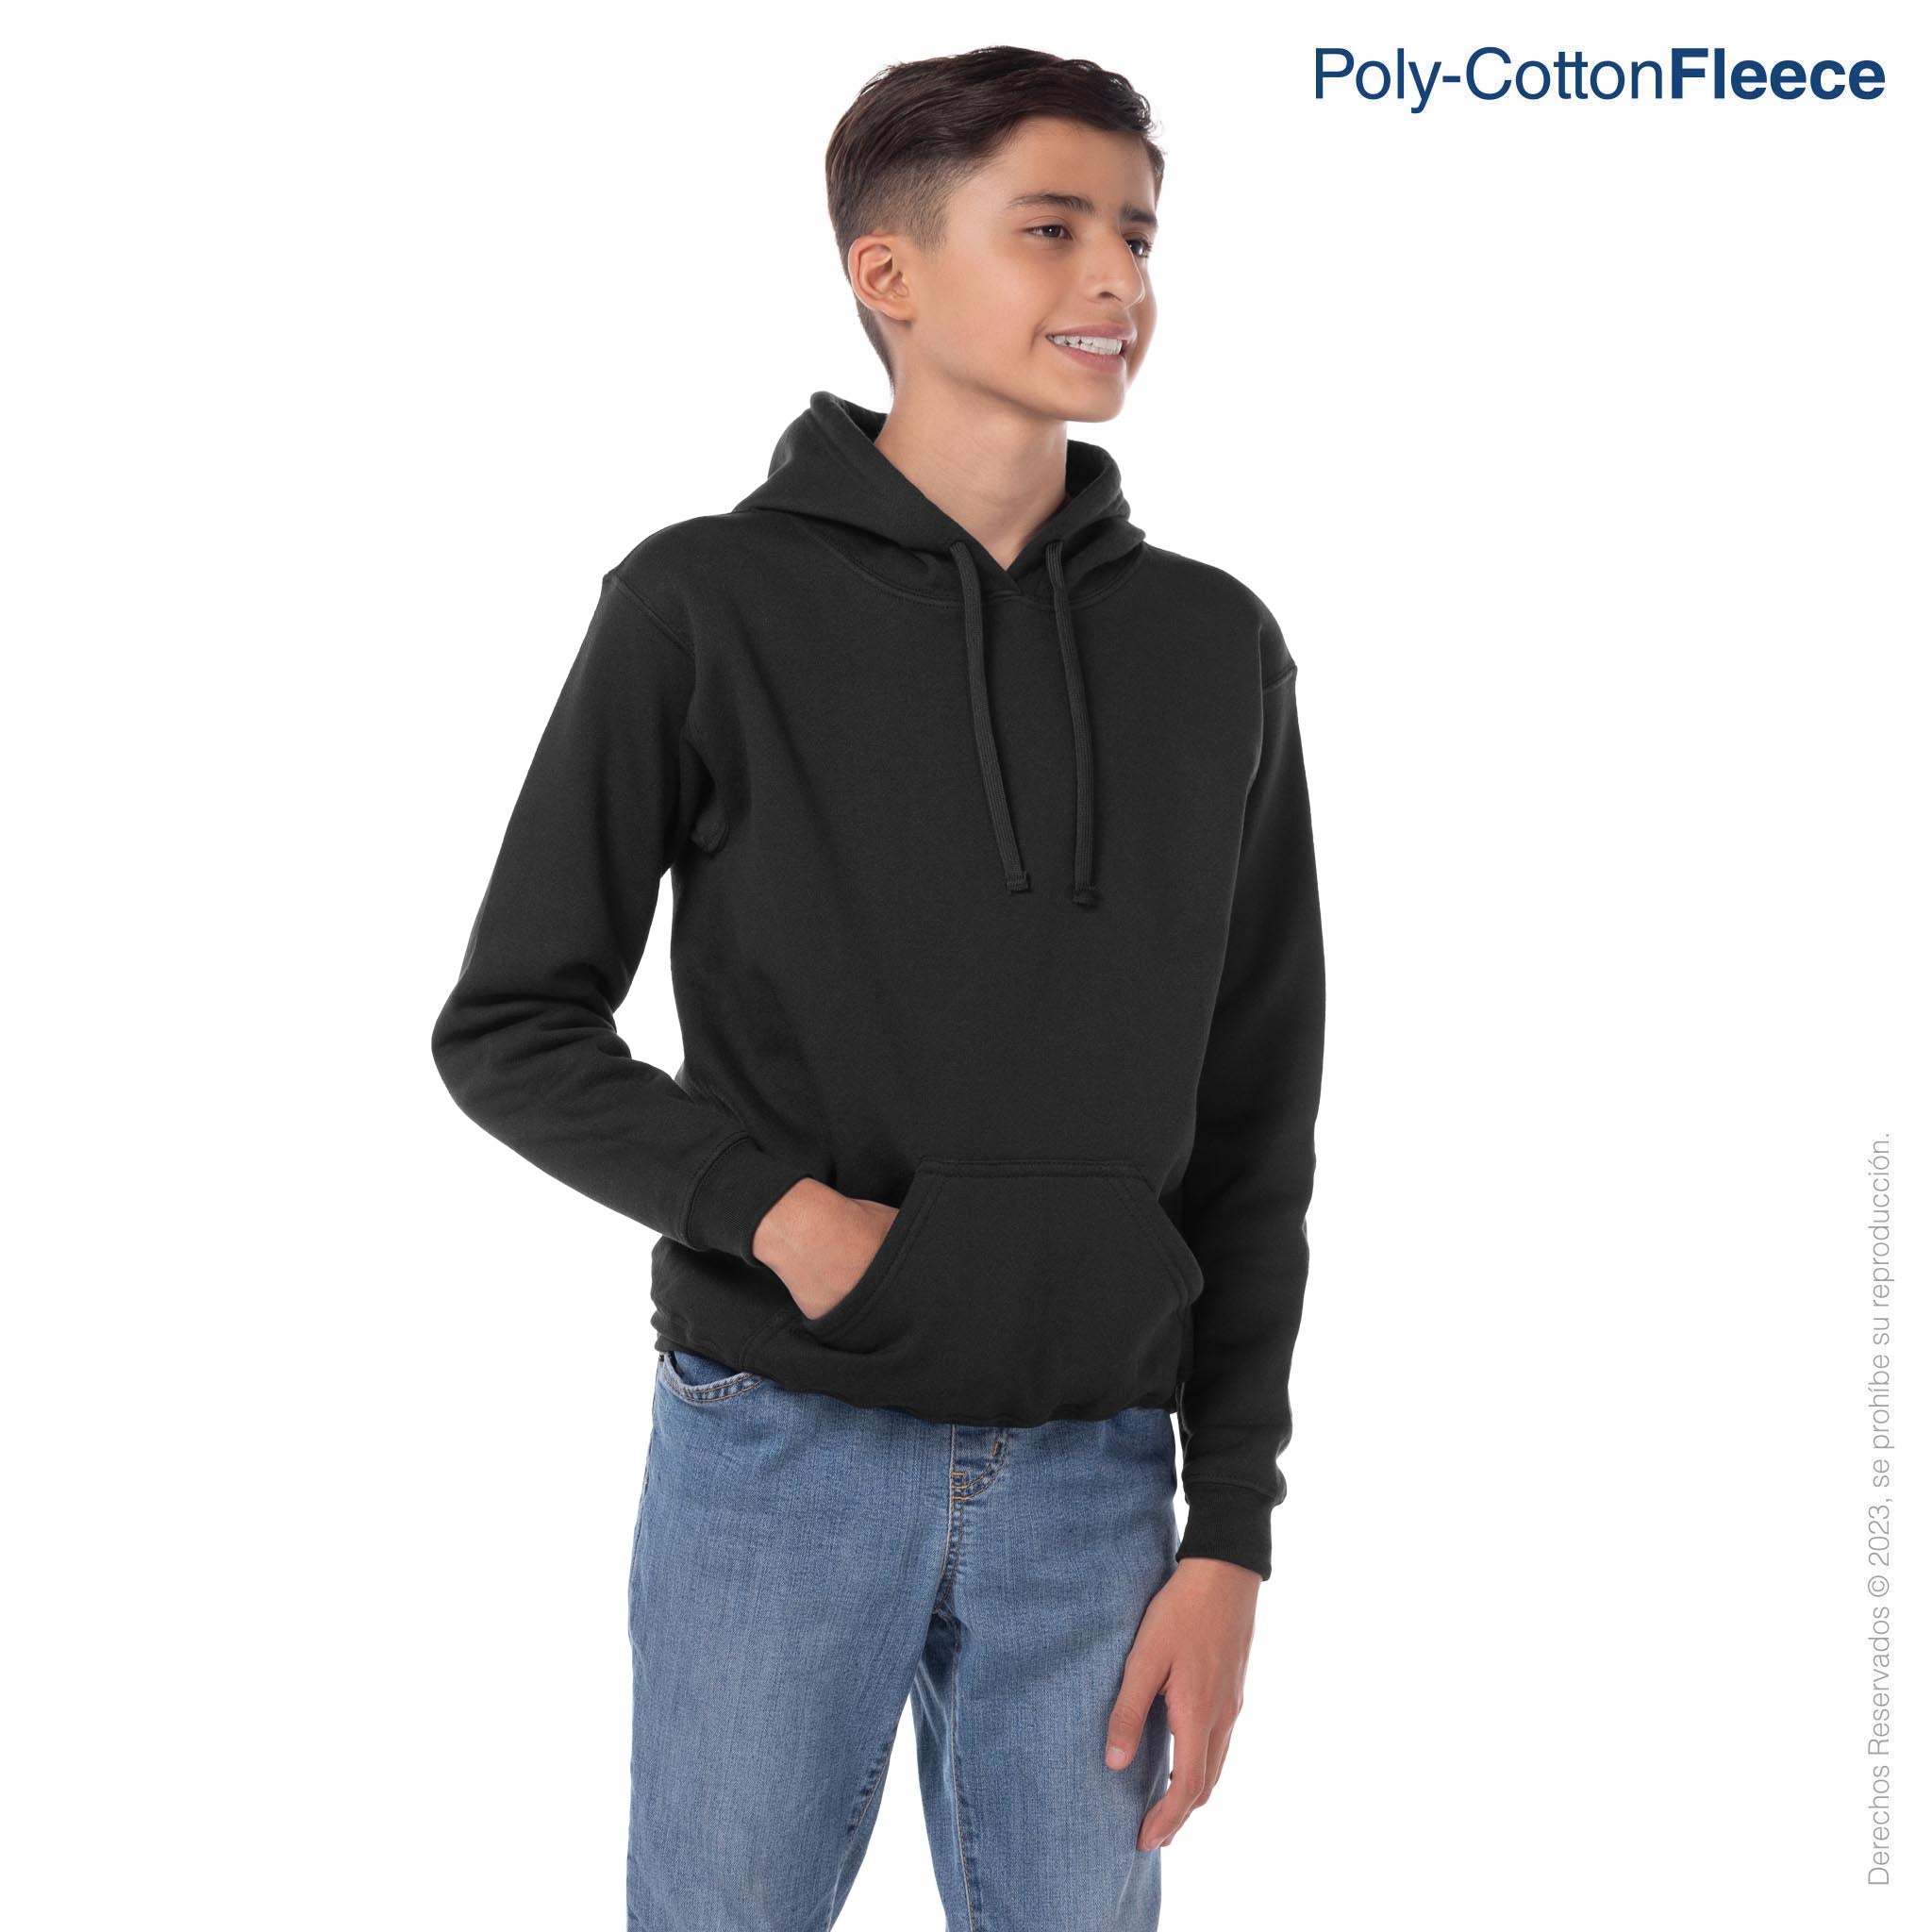 Youth's Unisex Hooded Sweatshirt With Kangaroo Pocket (New Intense